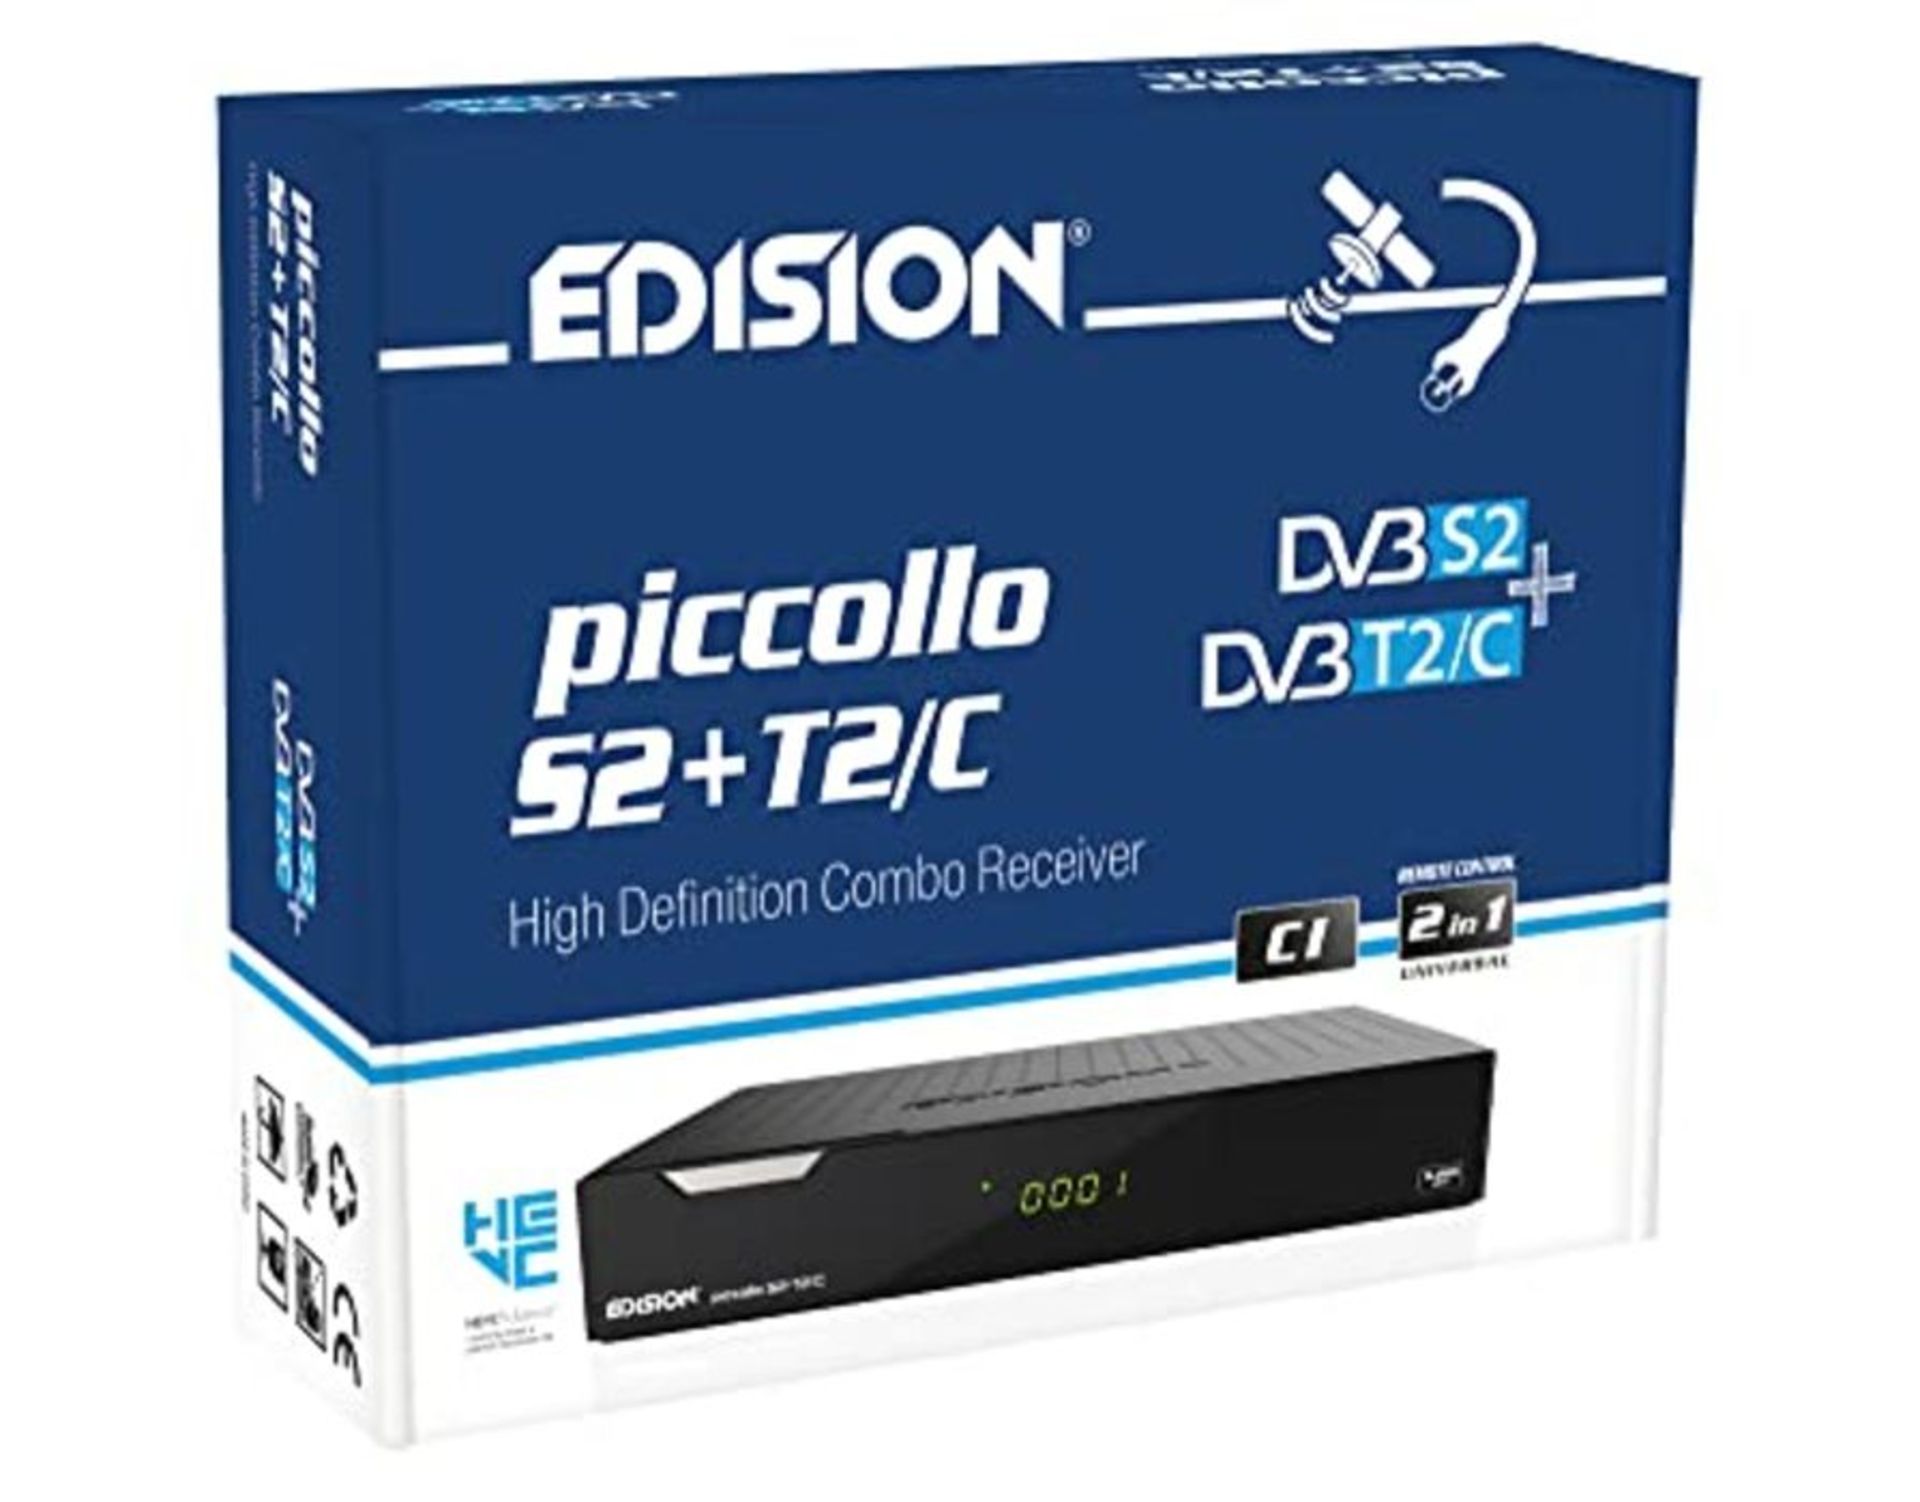 RRP £59.00 EDISION PICCOLLO S2+T2/C, Combo Receiver DVB-S2/T2/C H265 HEVC, C.I, Full HD, USB, 2in